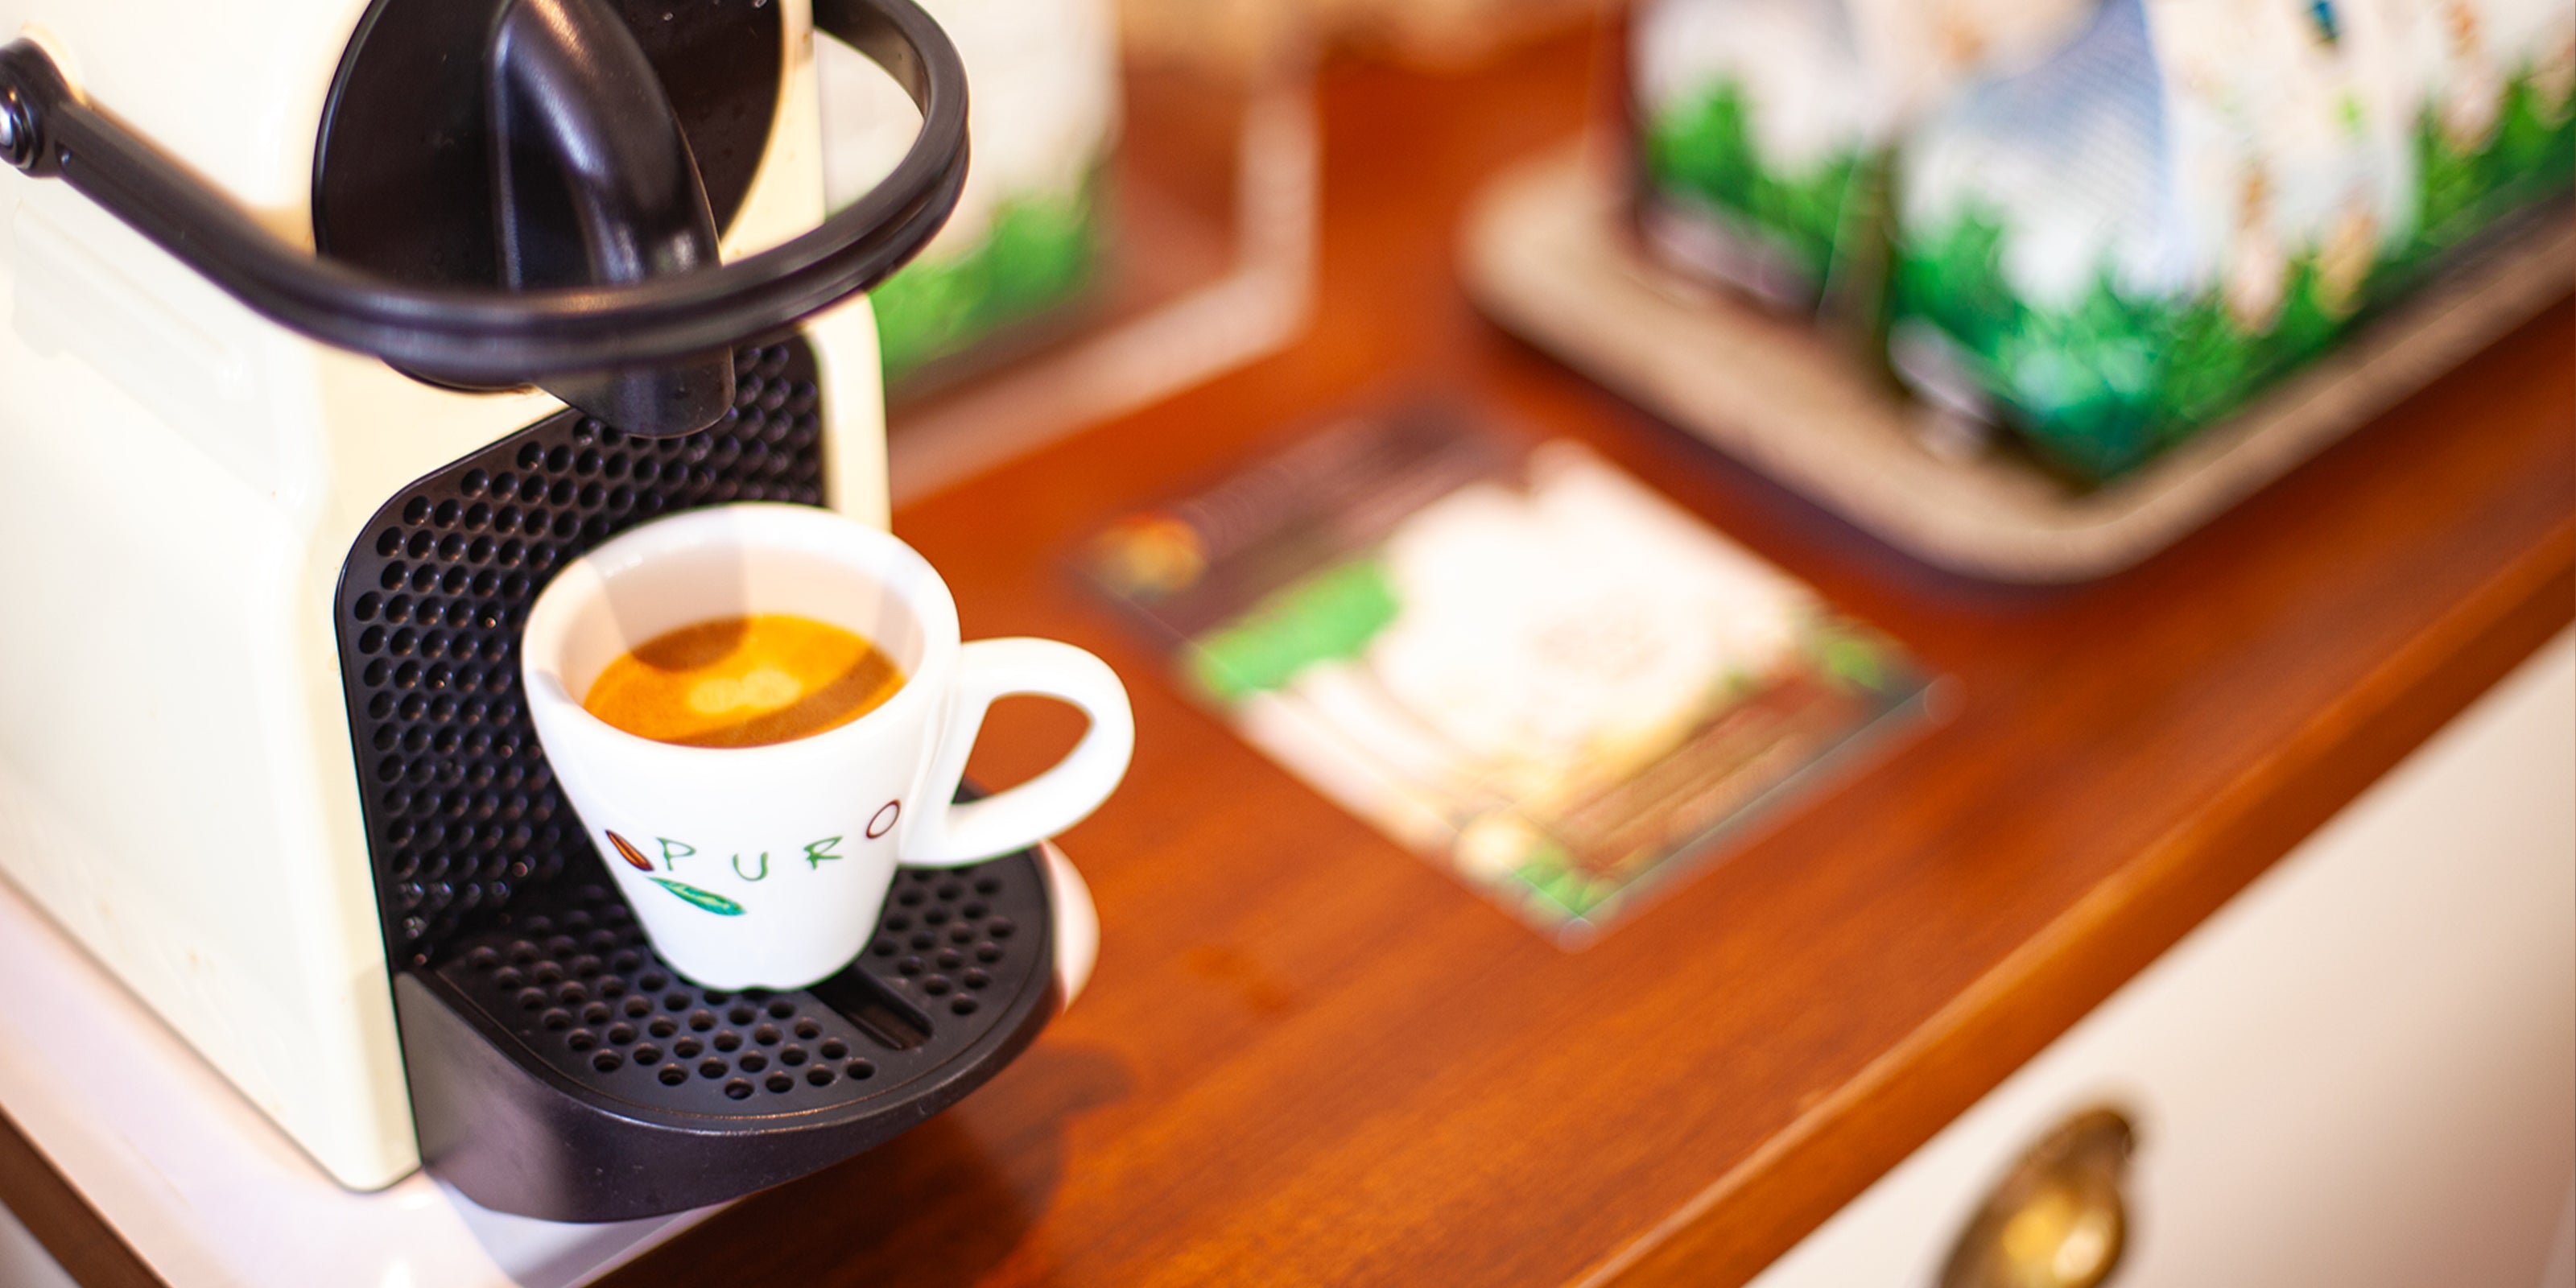 kaffe kapselmaskine med en espresso